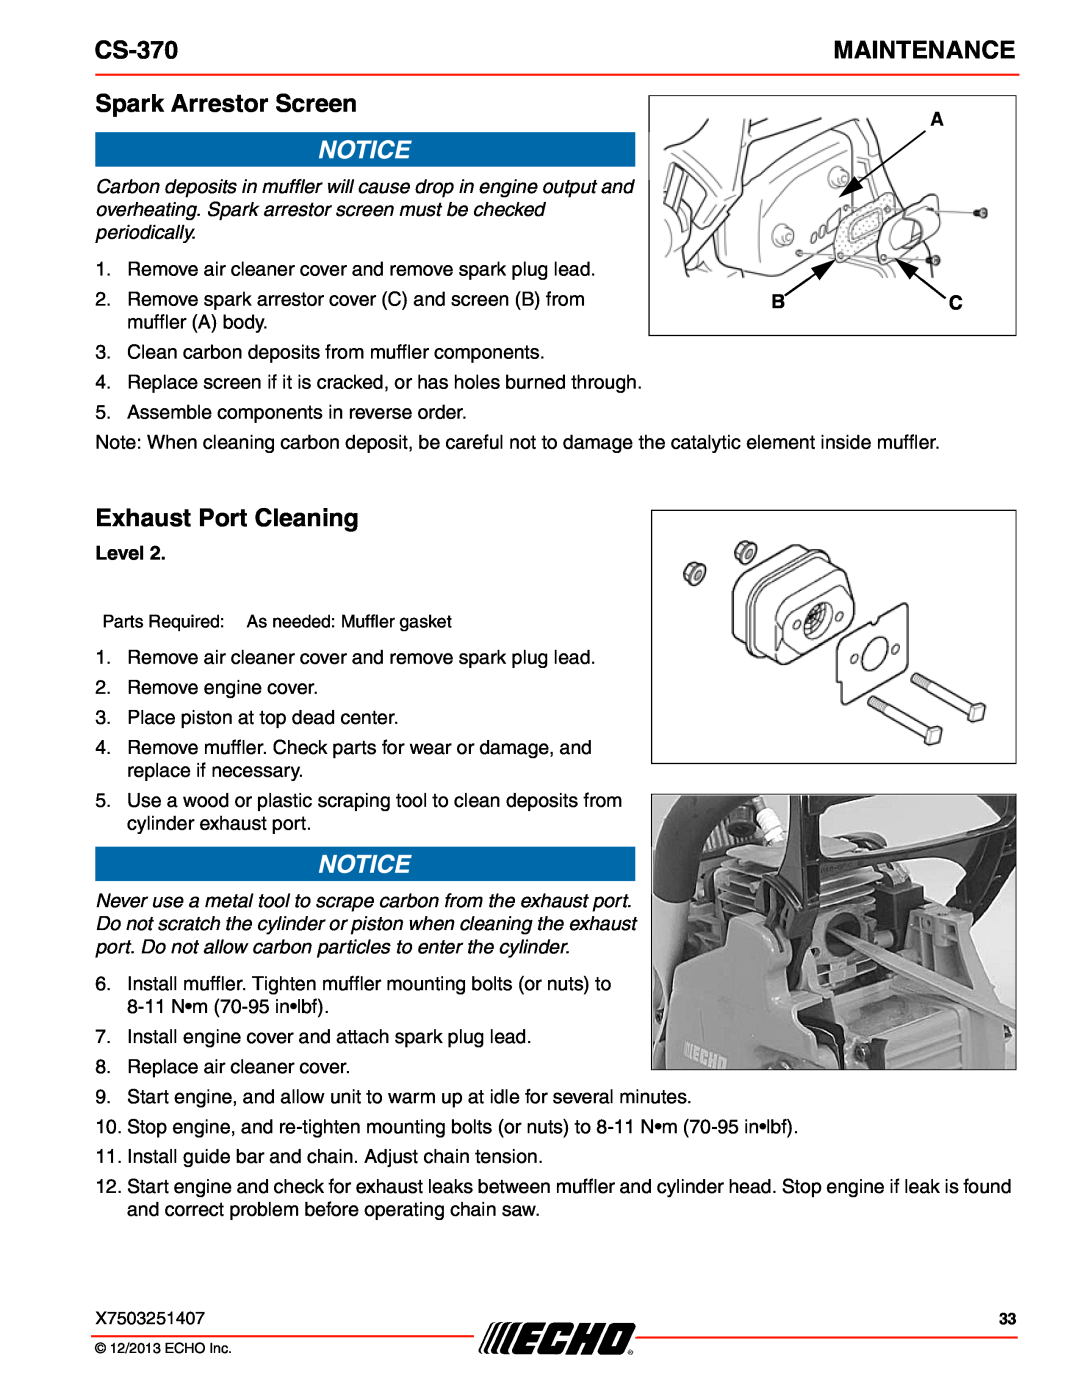 Echo CS-370 instruction manual Spark Arrestor Screen, Exhaust Port Cleaning, Level, Maintenance 